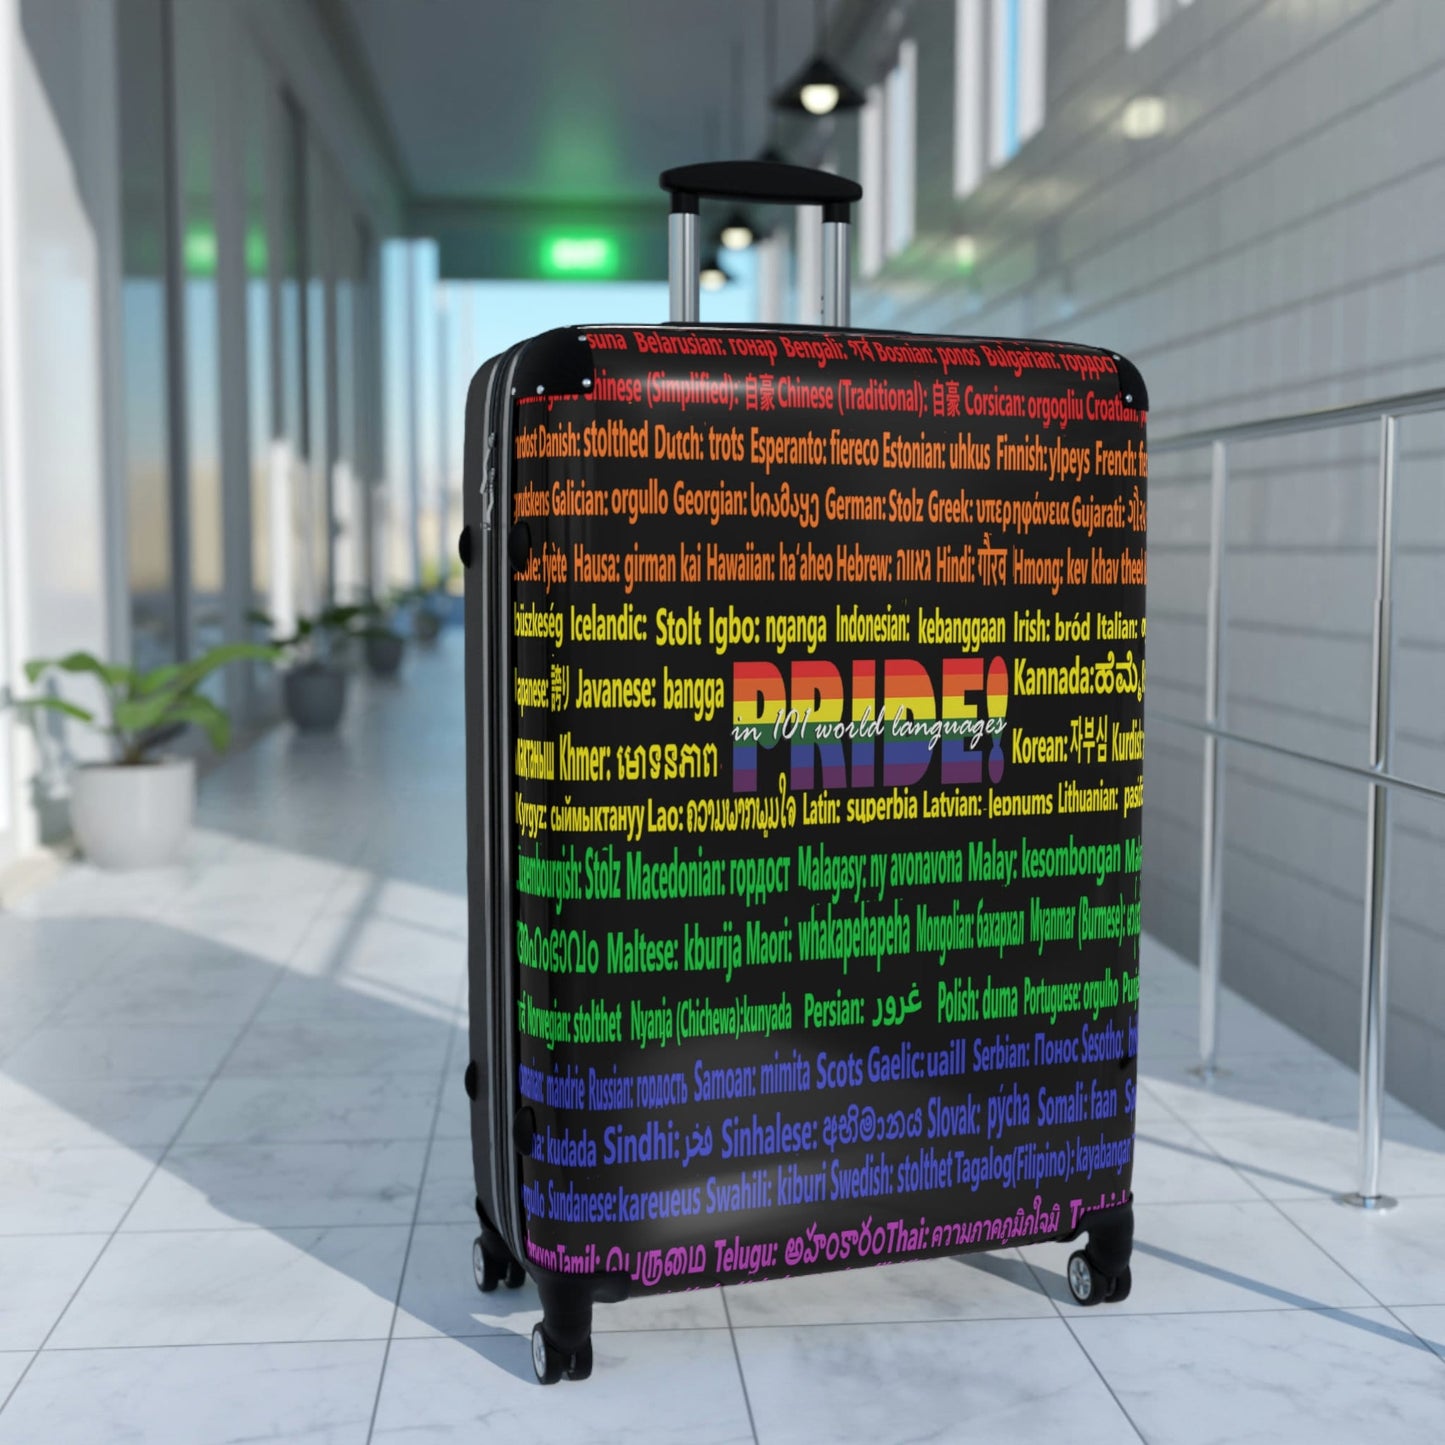 PRIDE LGBT Suitcase, Pride Suitcase, Bisexual Suitcase, LGBT Suitcase, pride luggage, Queer suitcase, gay luggage, gay pride